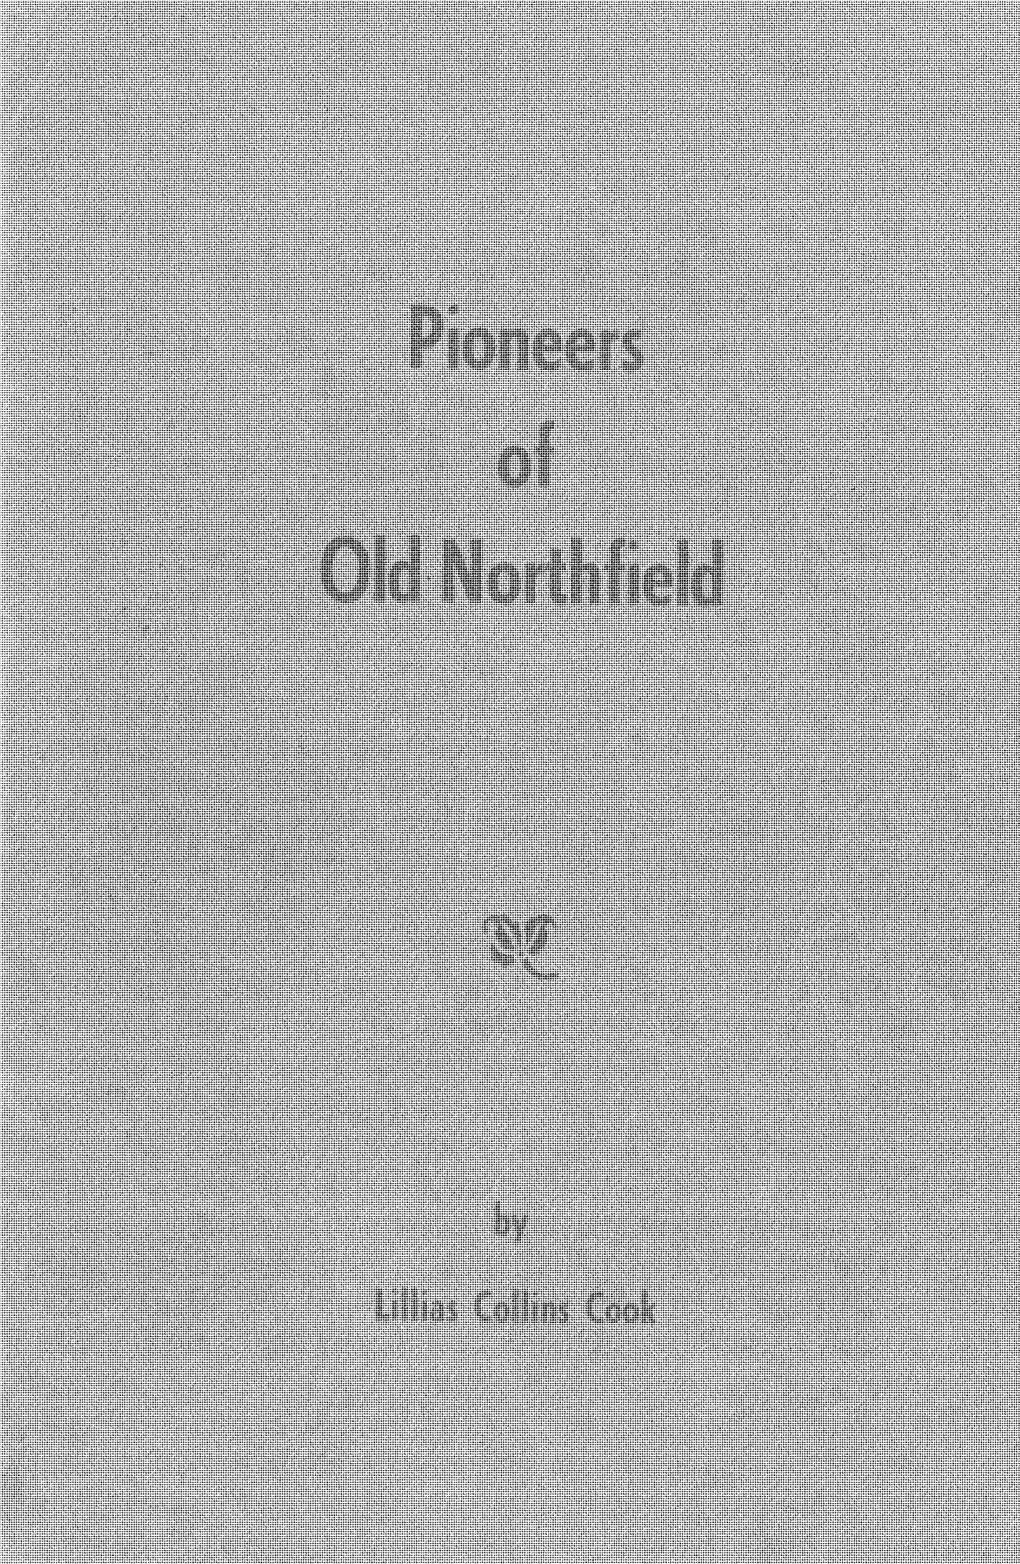 Pioneers of Old Northfield.Pdf